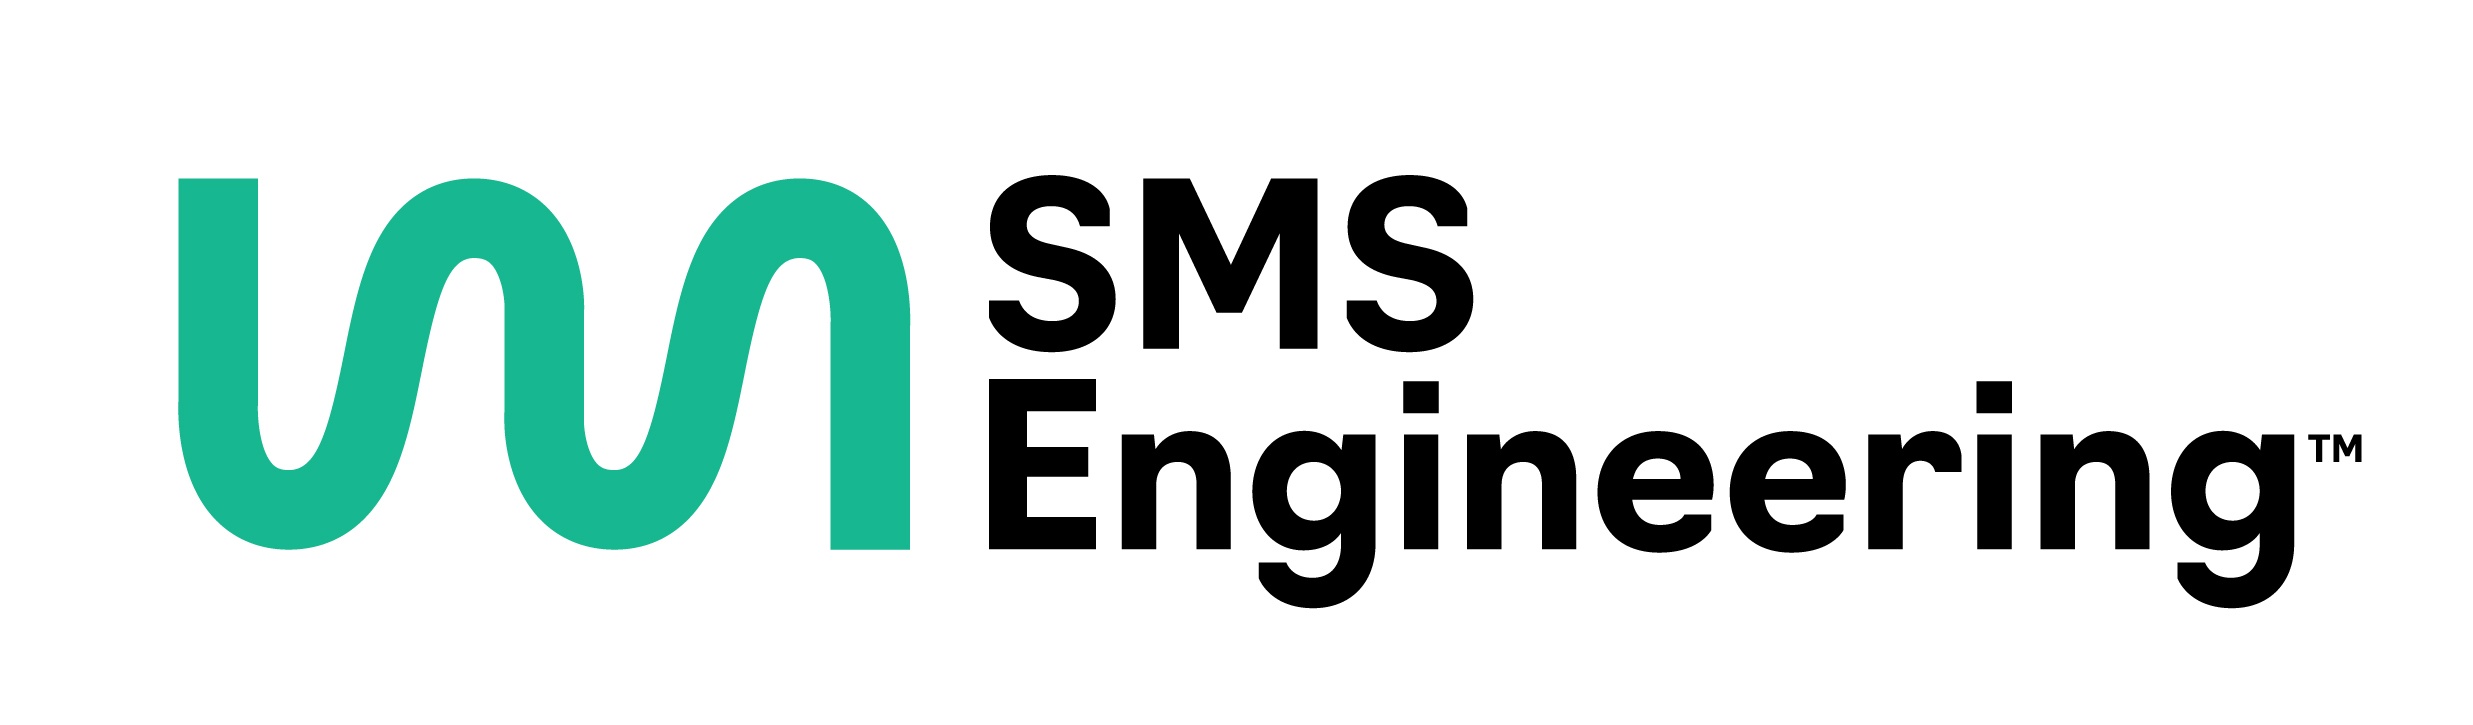 SMS Engineering logo